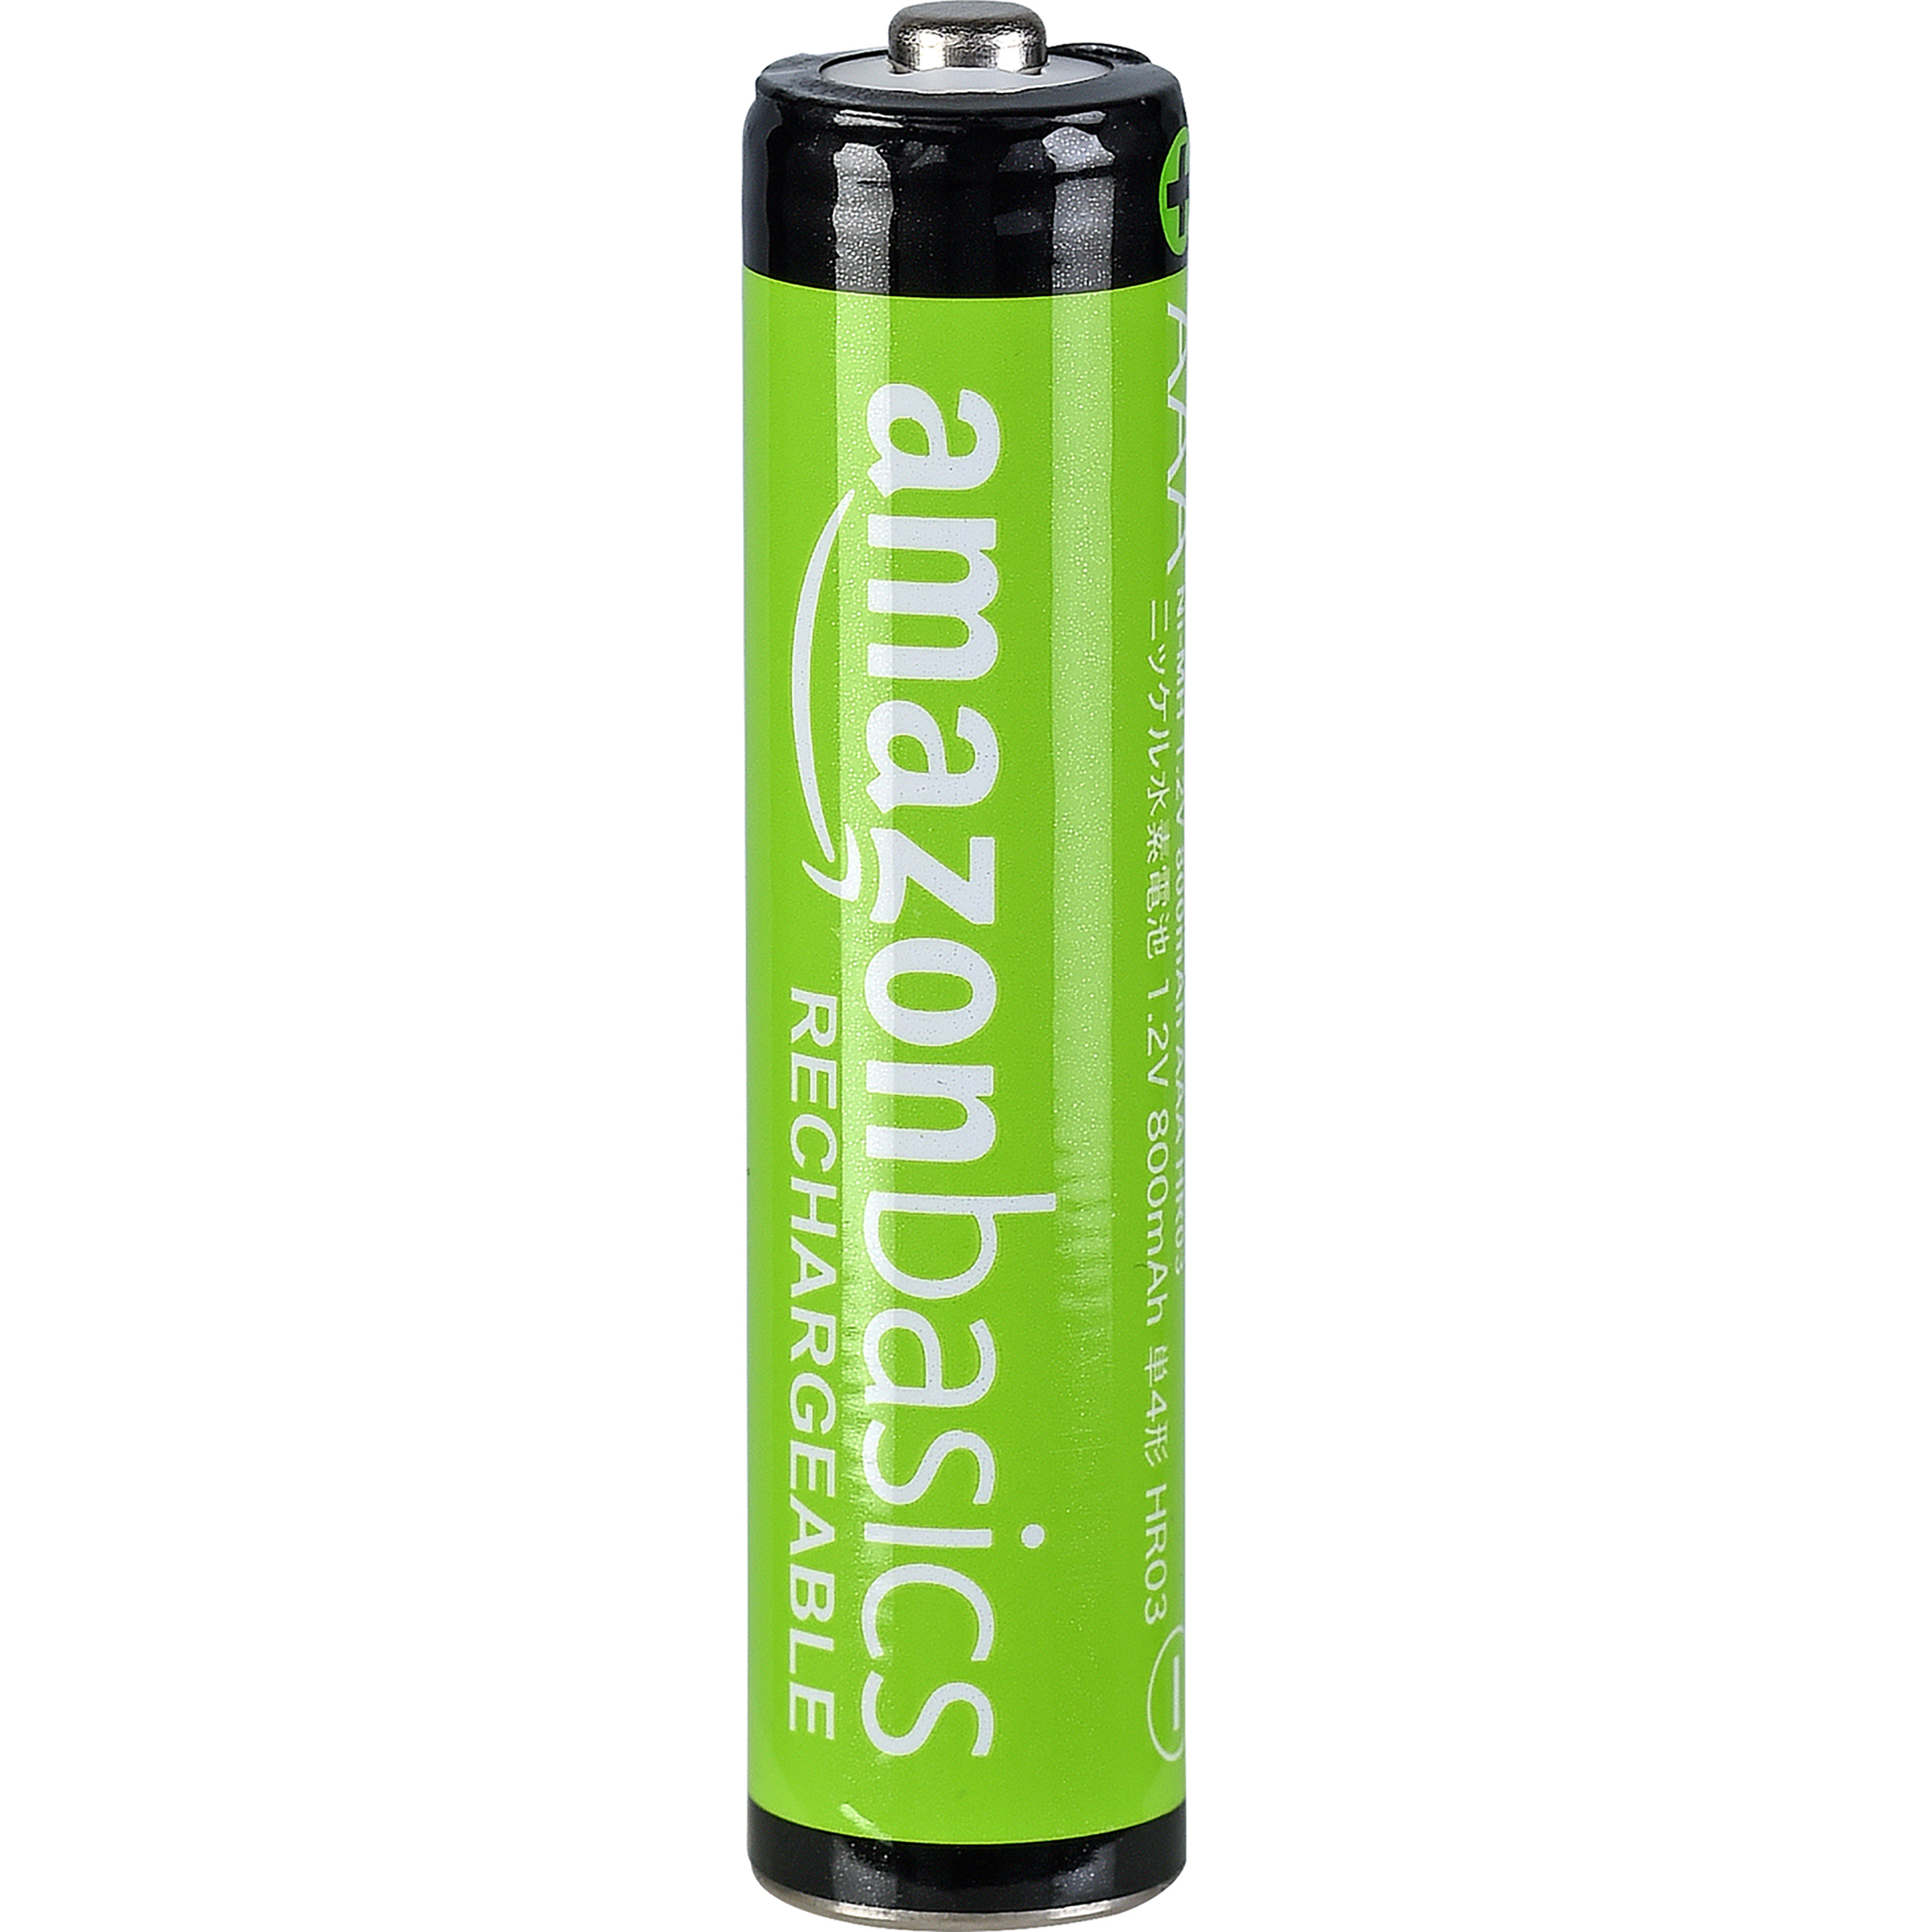 Test  Basics AAA Rechargeable Batterie - Pile - UFC-Que Choisir